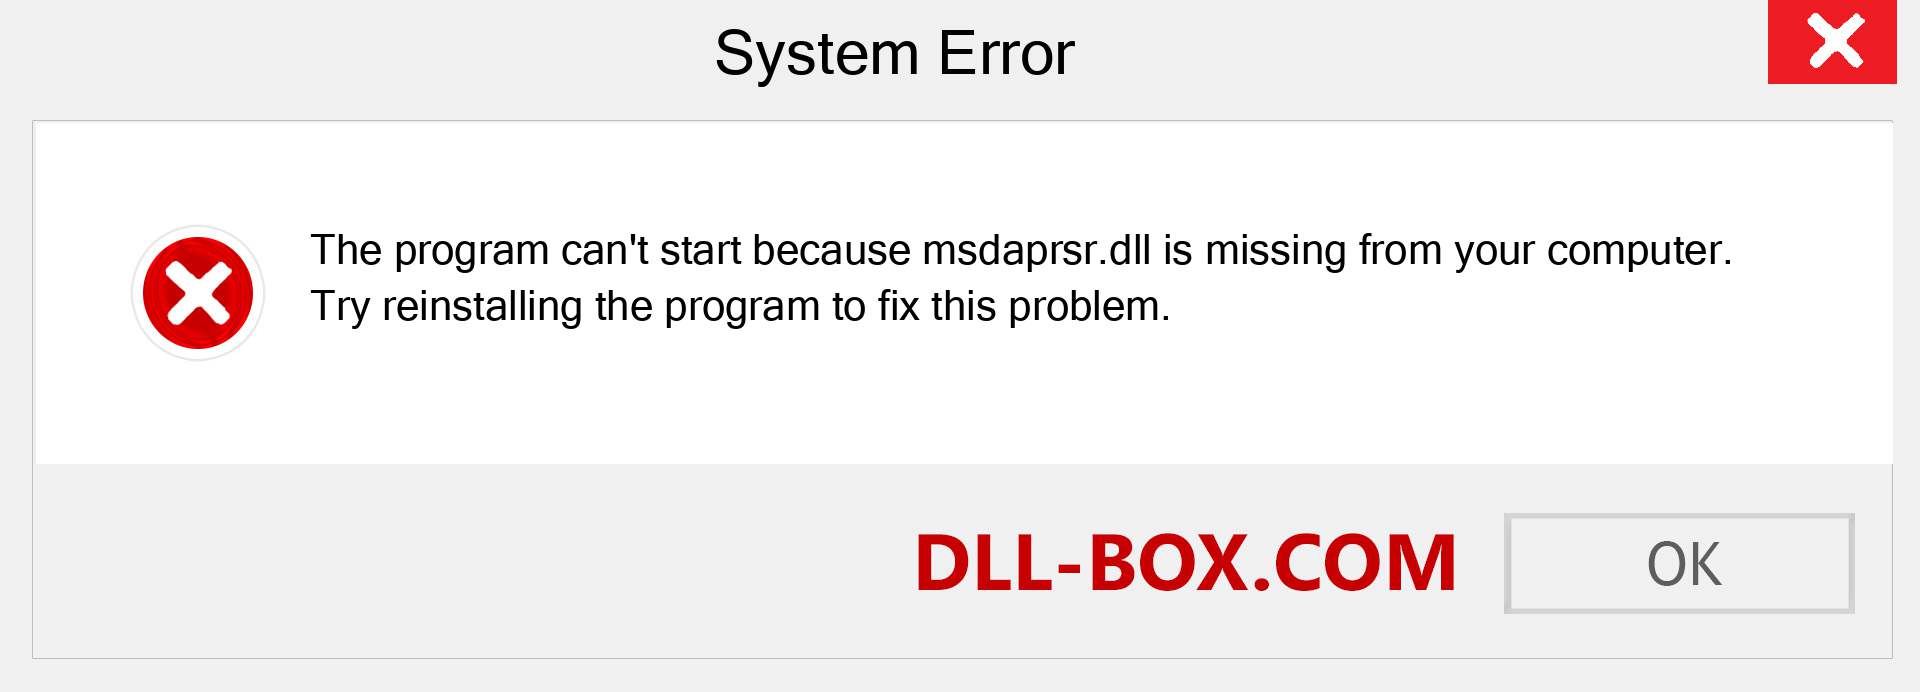  msdaprsr.dll file is missing?. Download for Windows 7, 8, 10 - Fix  msdaprsr dll Missing Error on Windows, photos, images